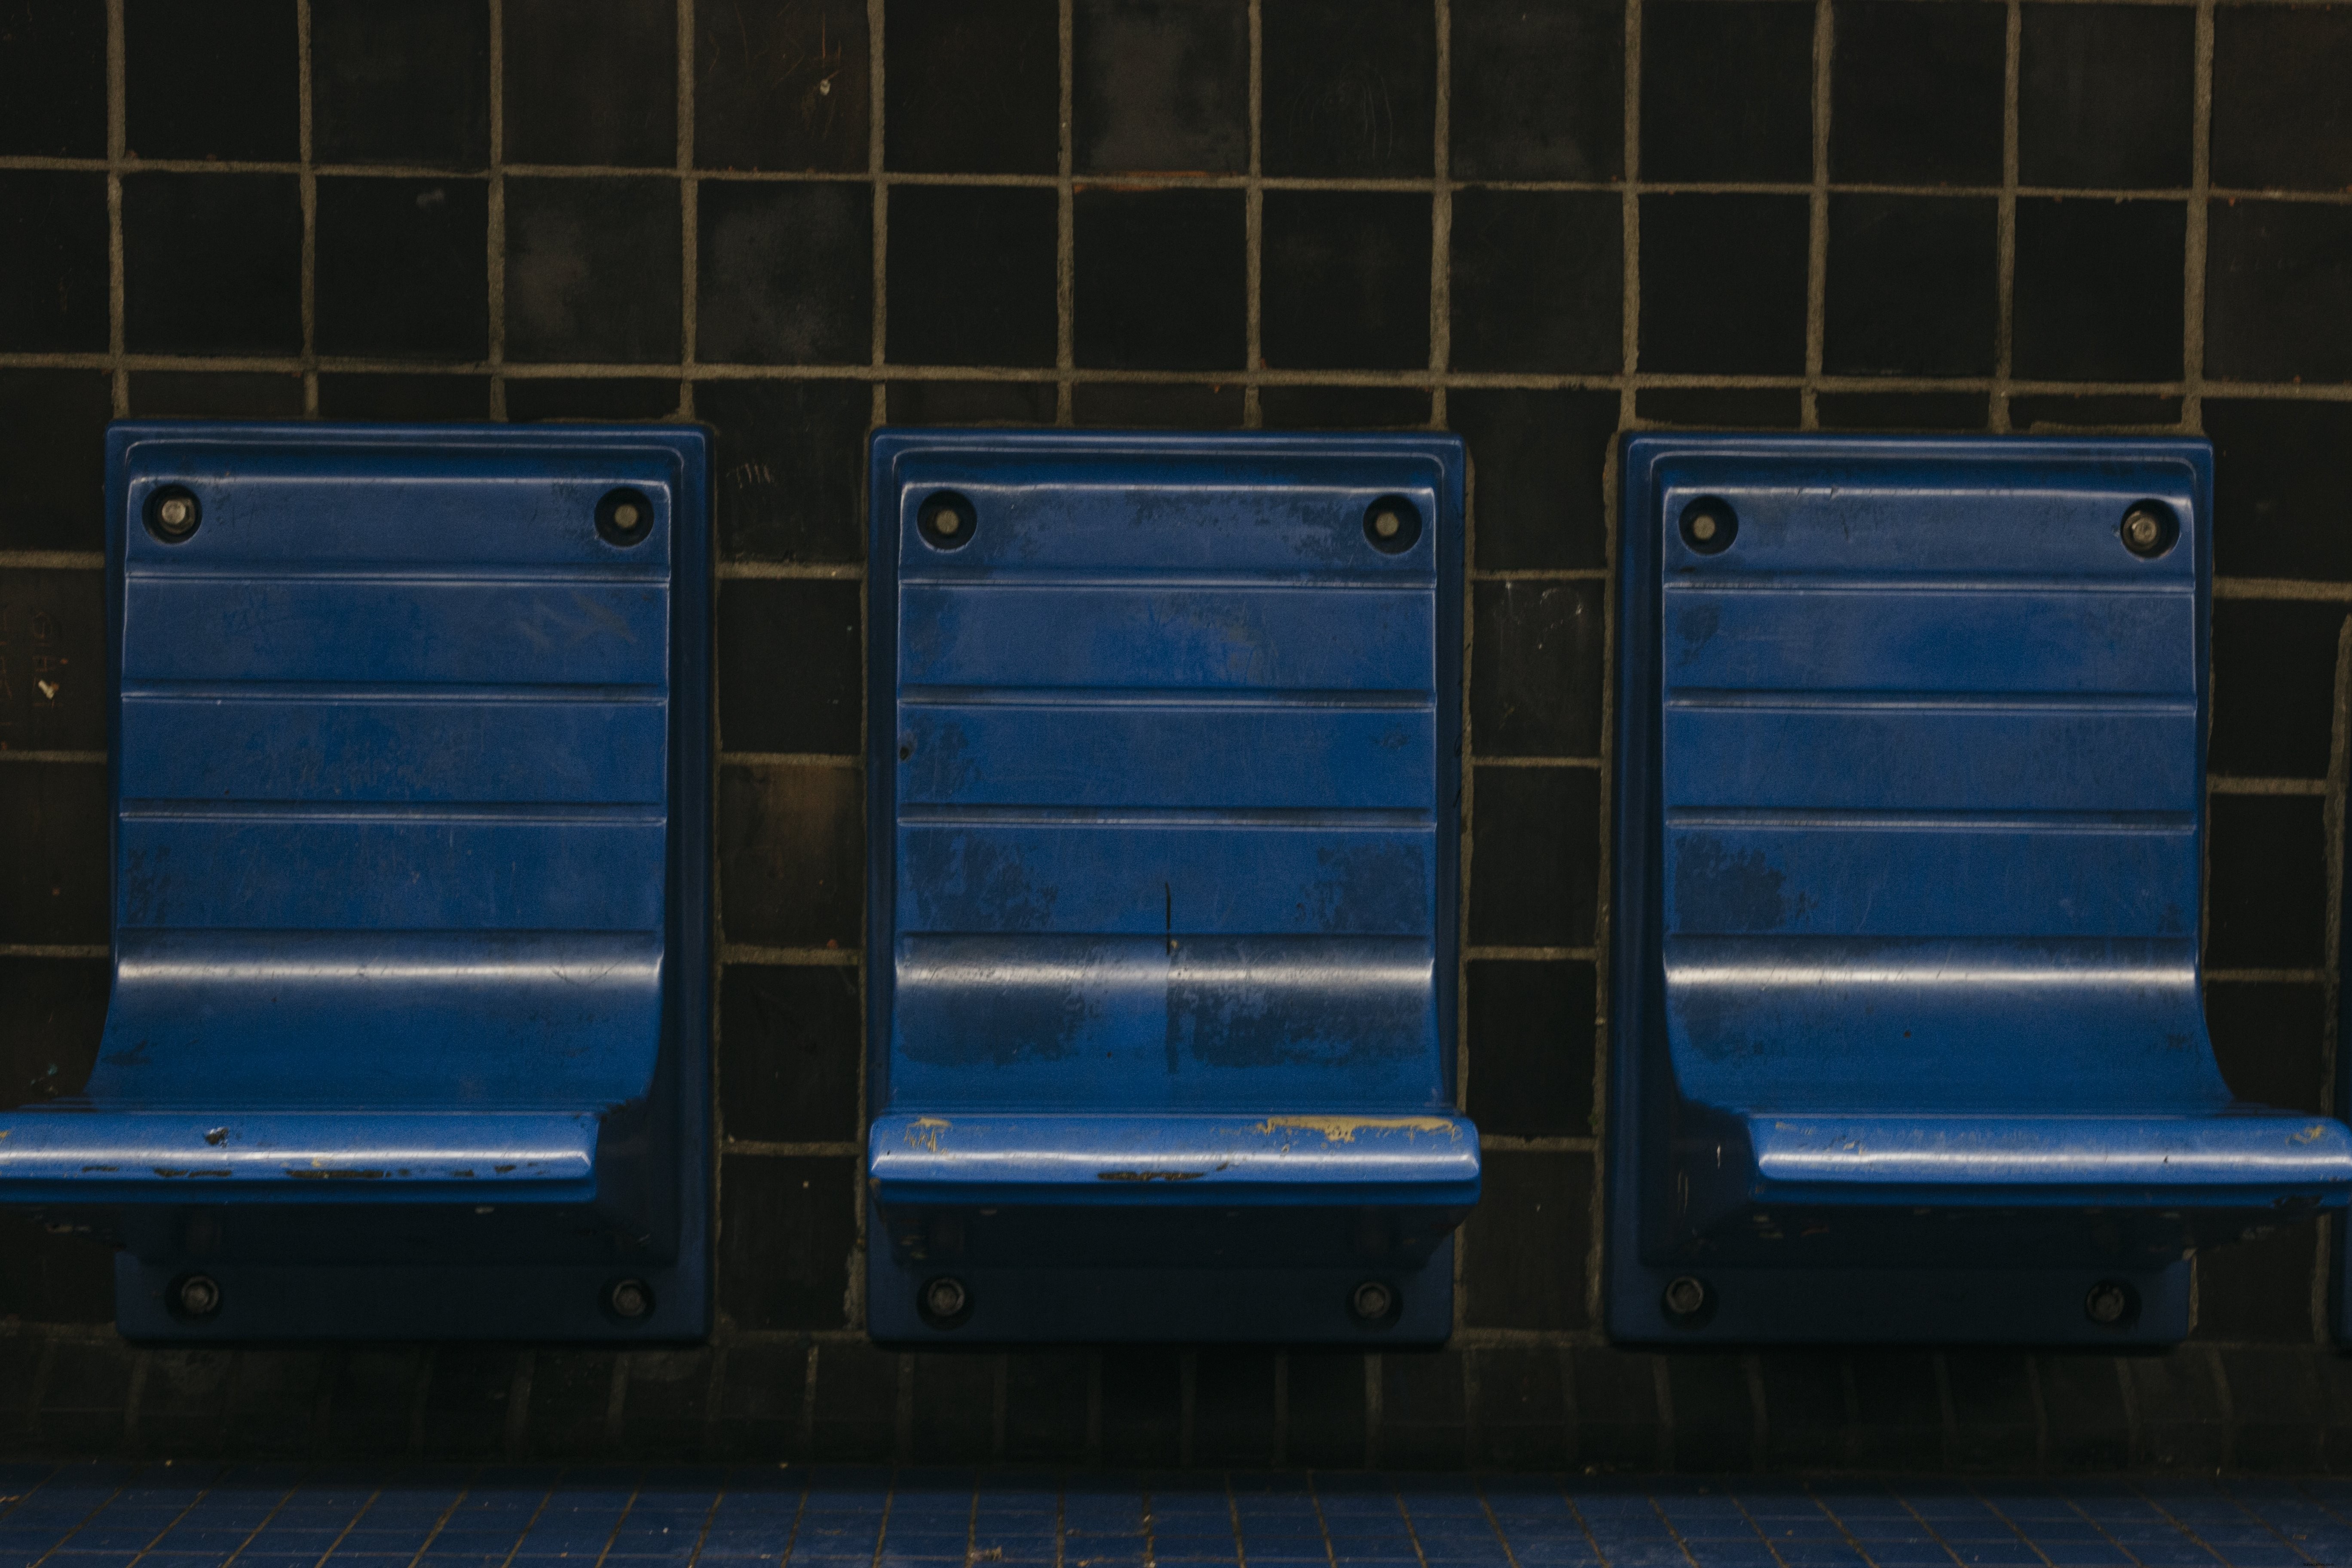 Sedie blu su una piattaforma della metropolitana foto 